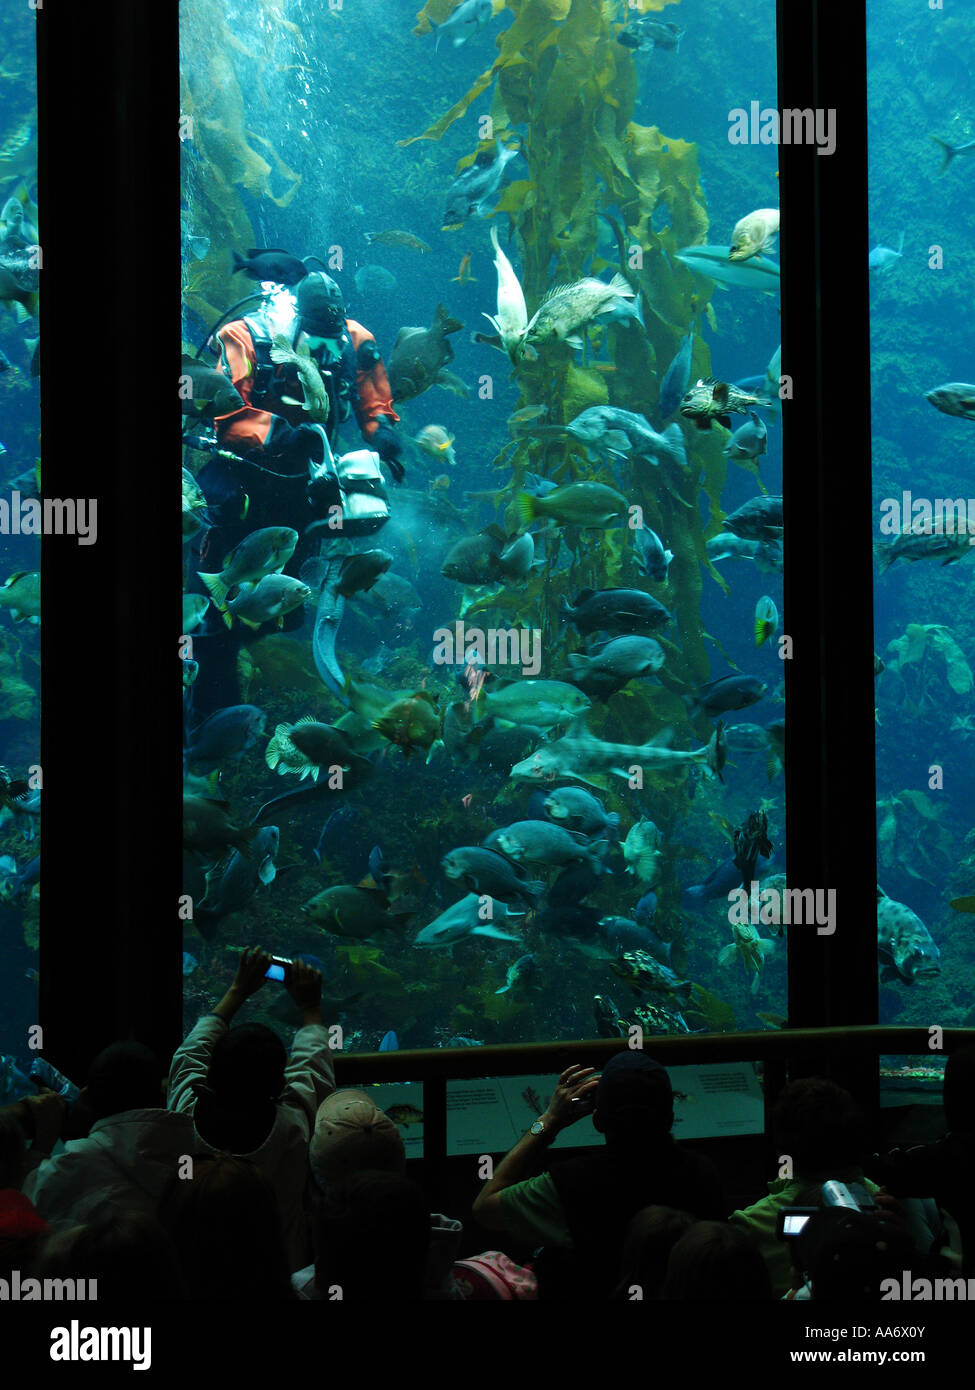 Regardez touristiques aquarium Banque D'Images